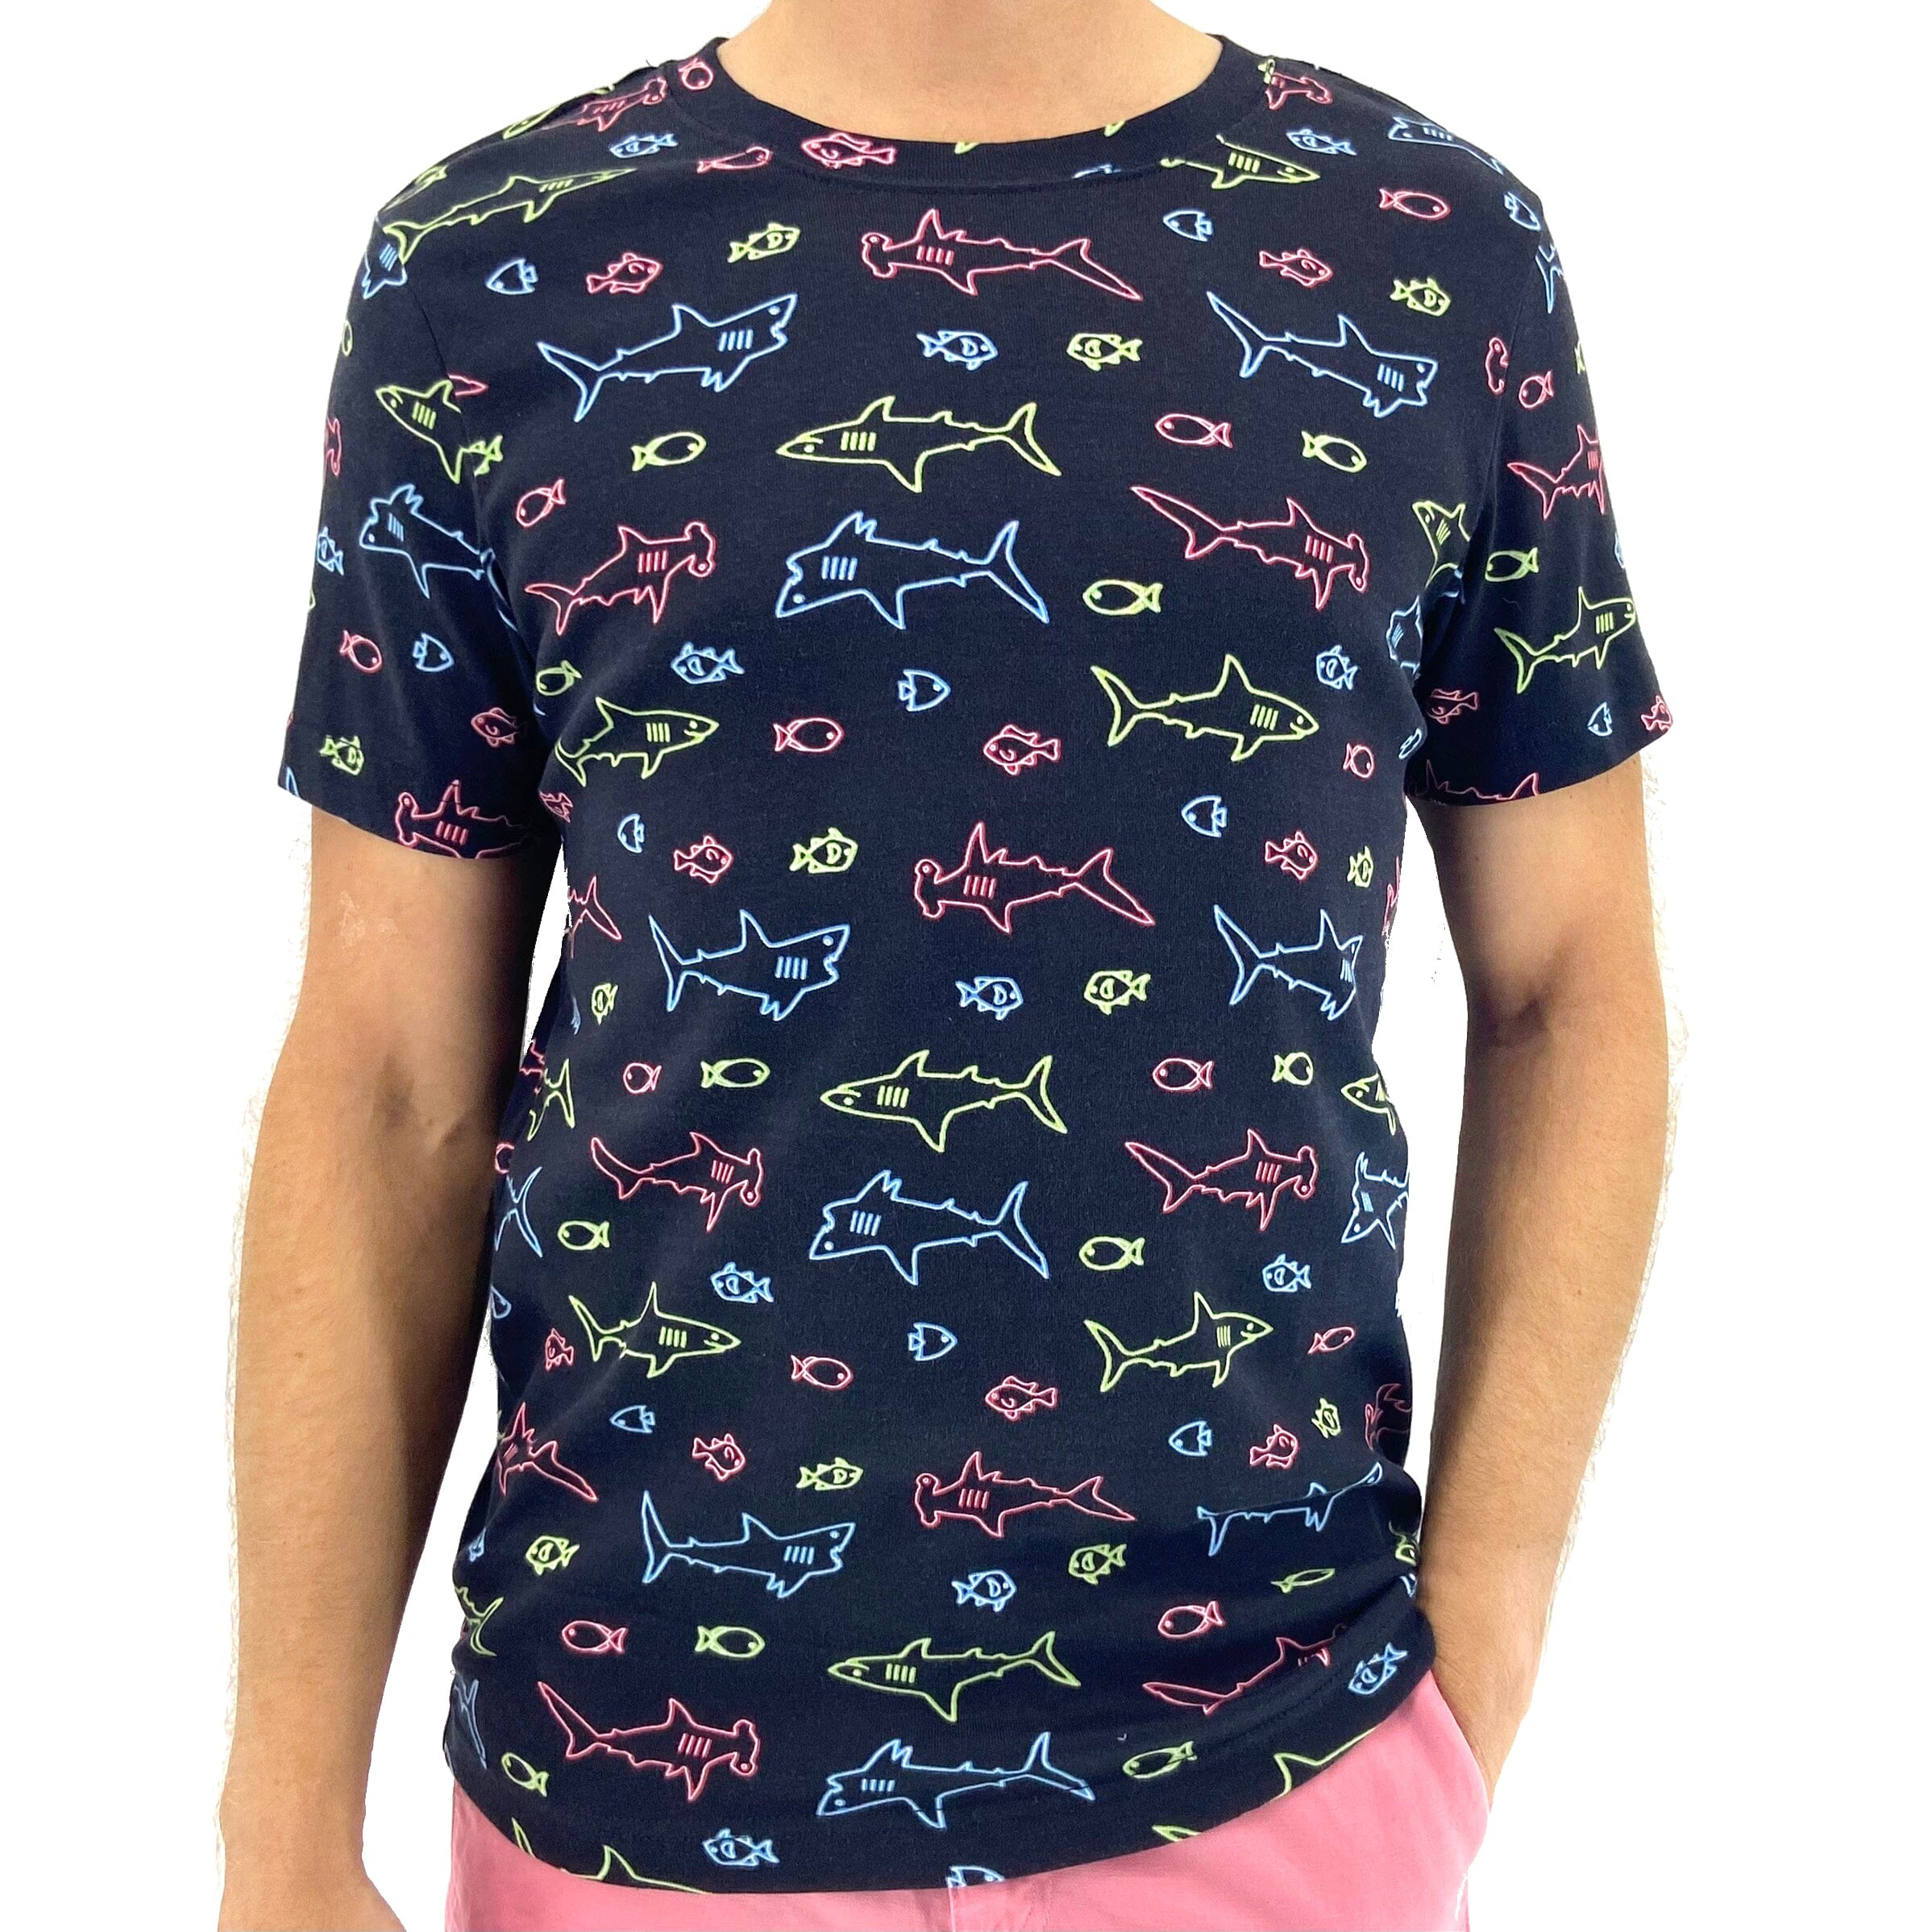 Men's Classic Hammerhead Shark Patterned Cotton Crew Neck T-Shirt Top